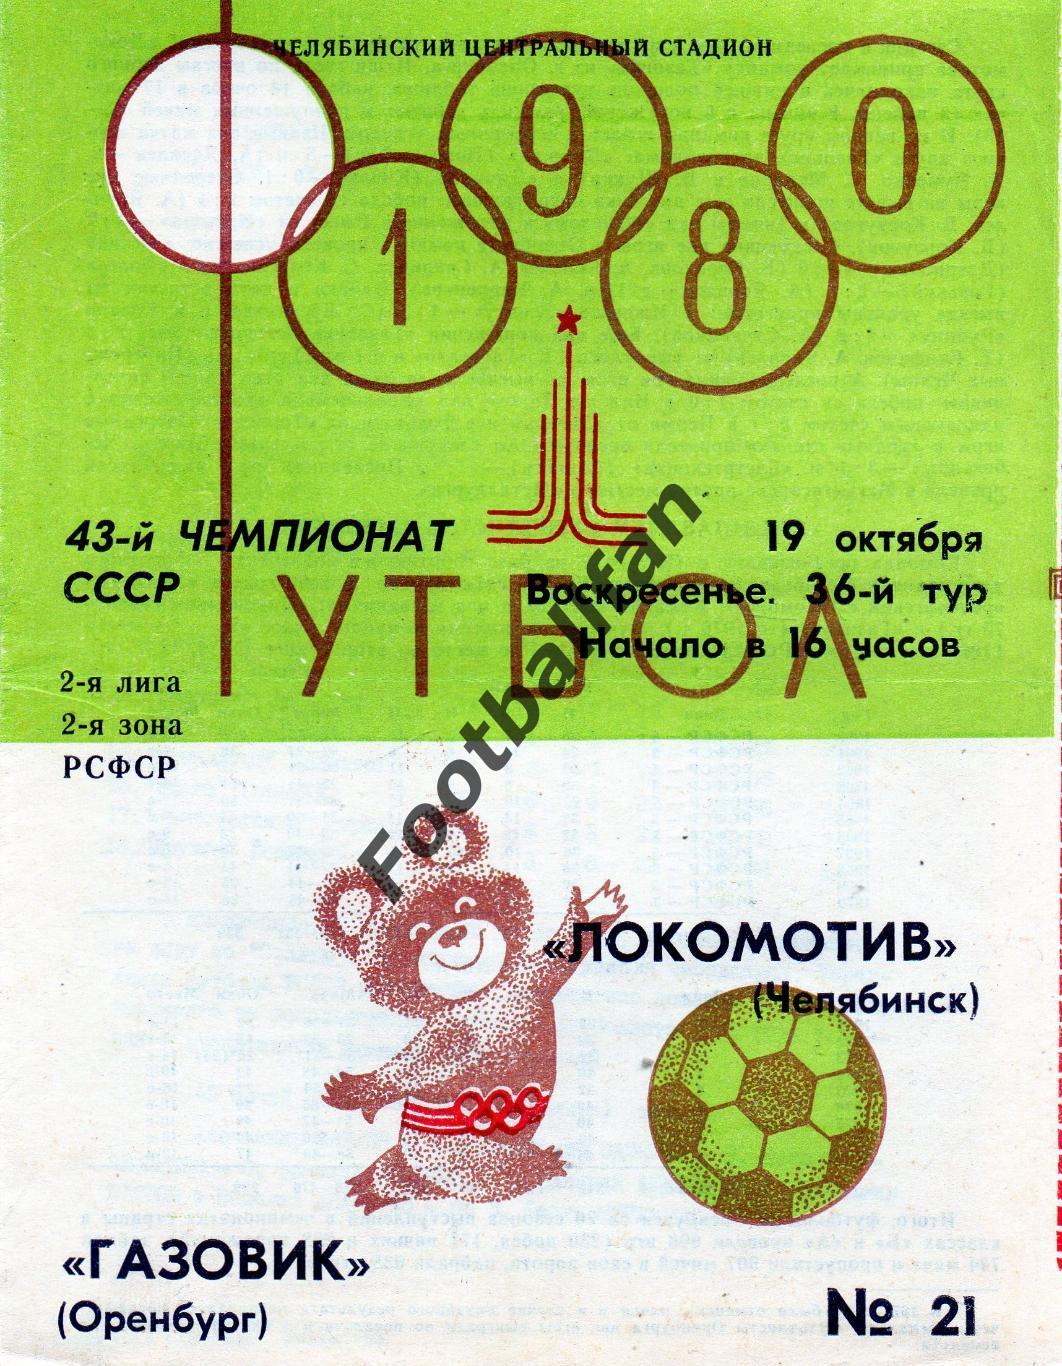 Локомотив Челябинск - Газовик Оренбург 19.10.1980